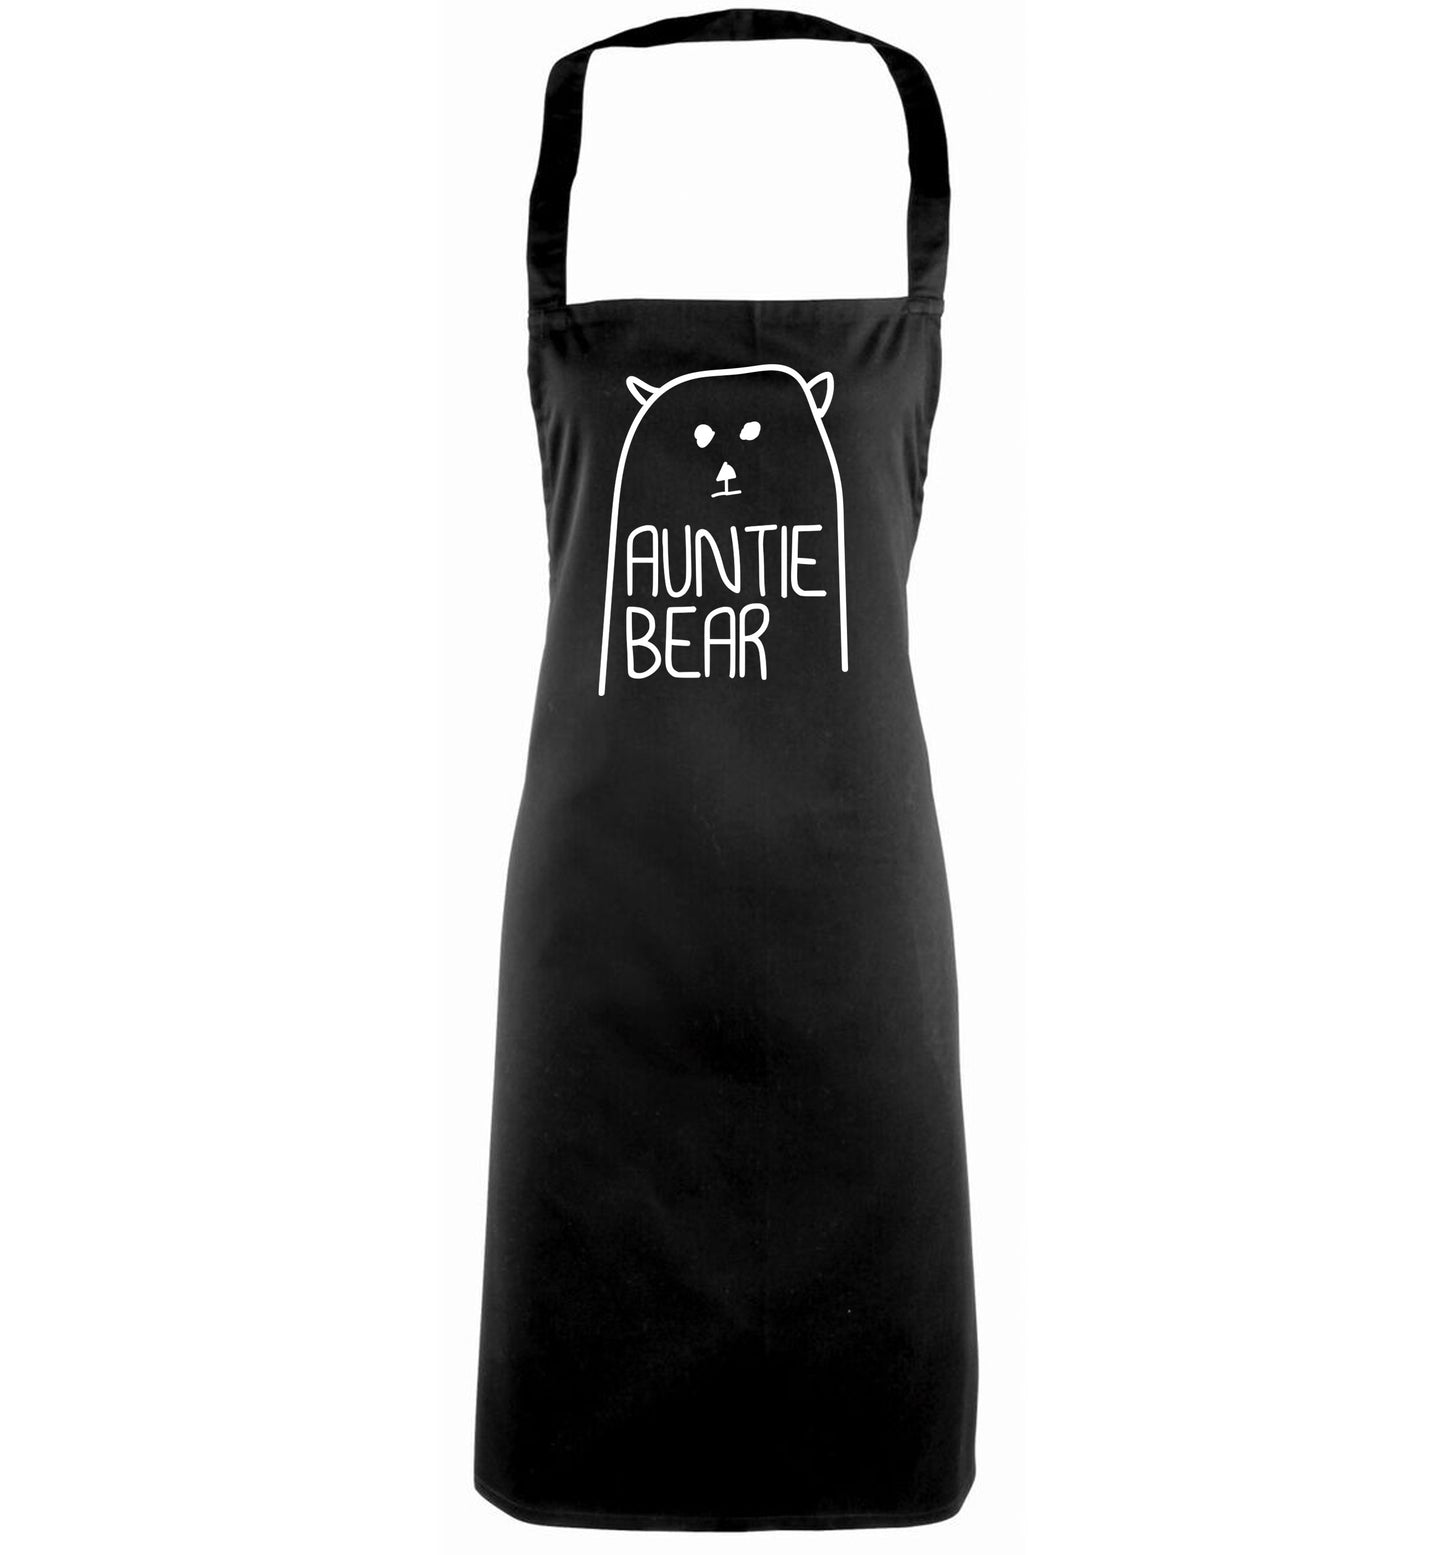 Auntie bear black apron